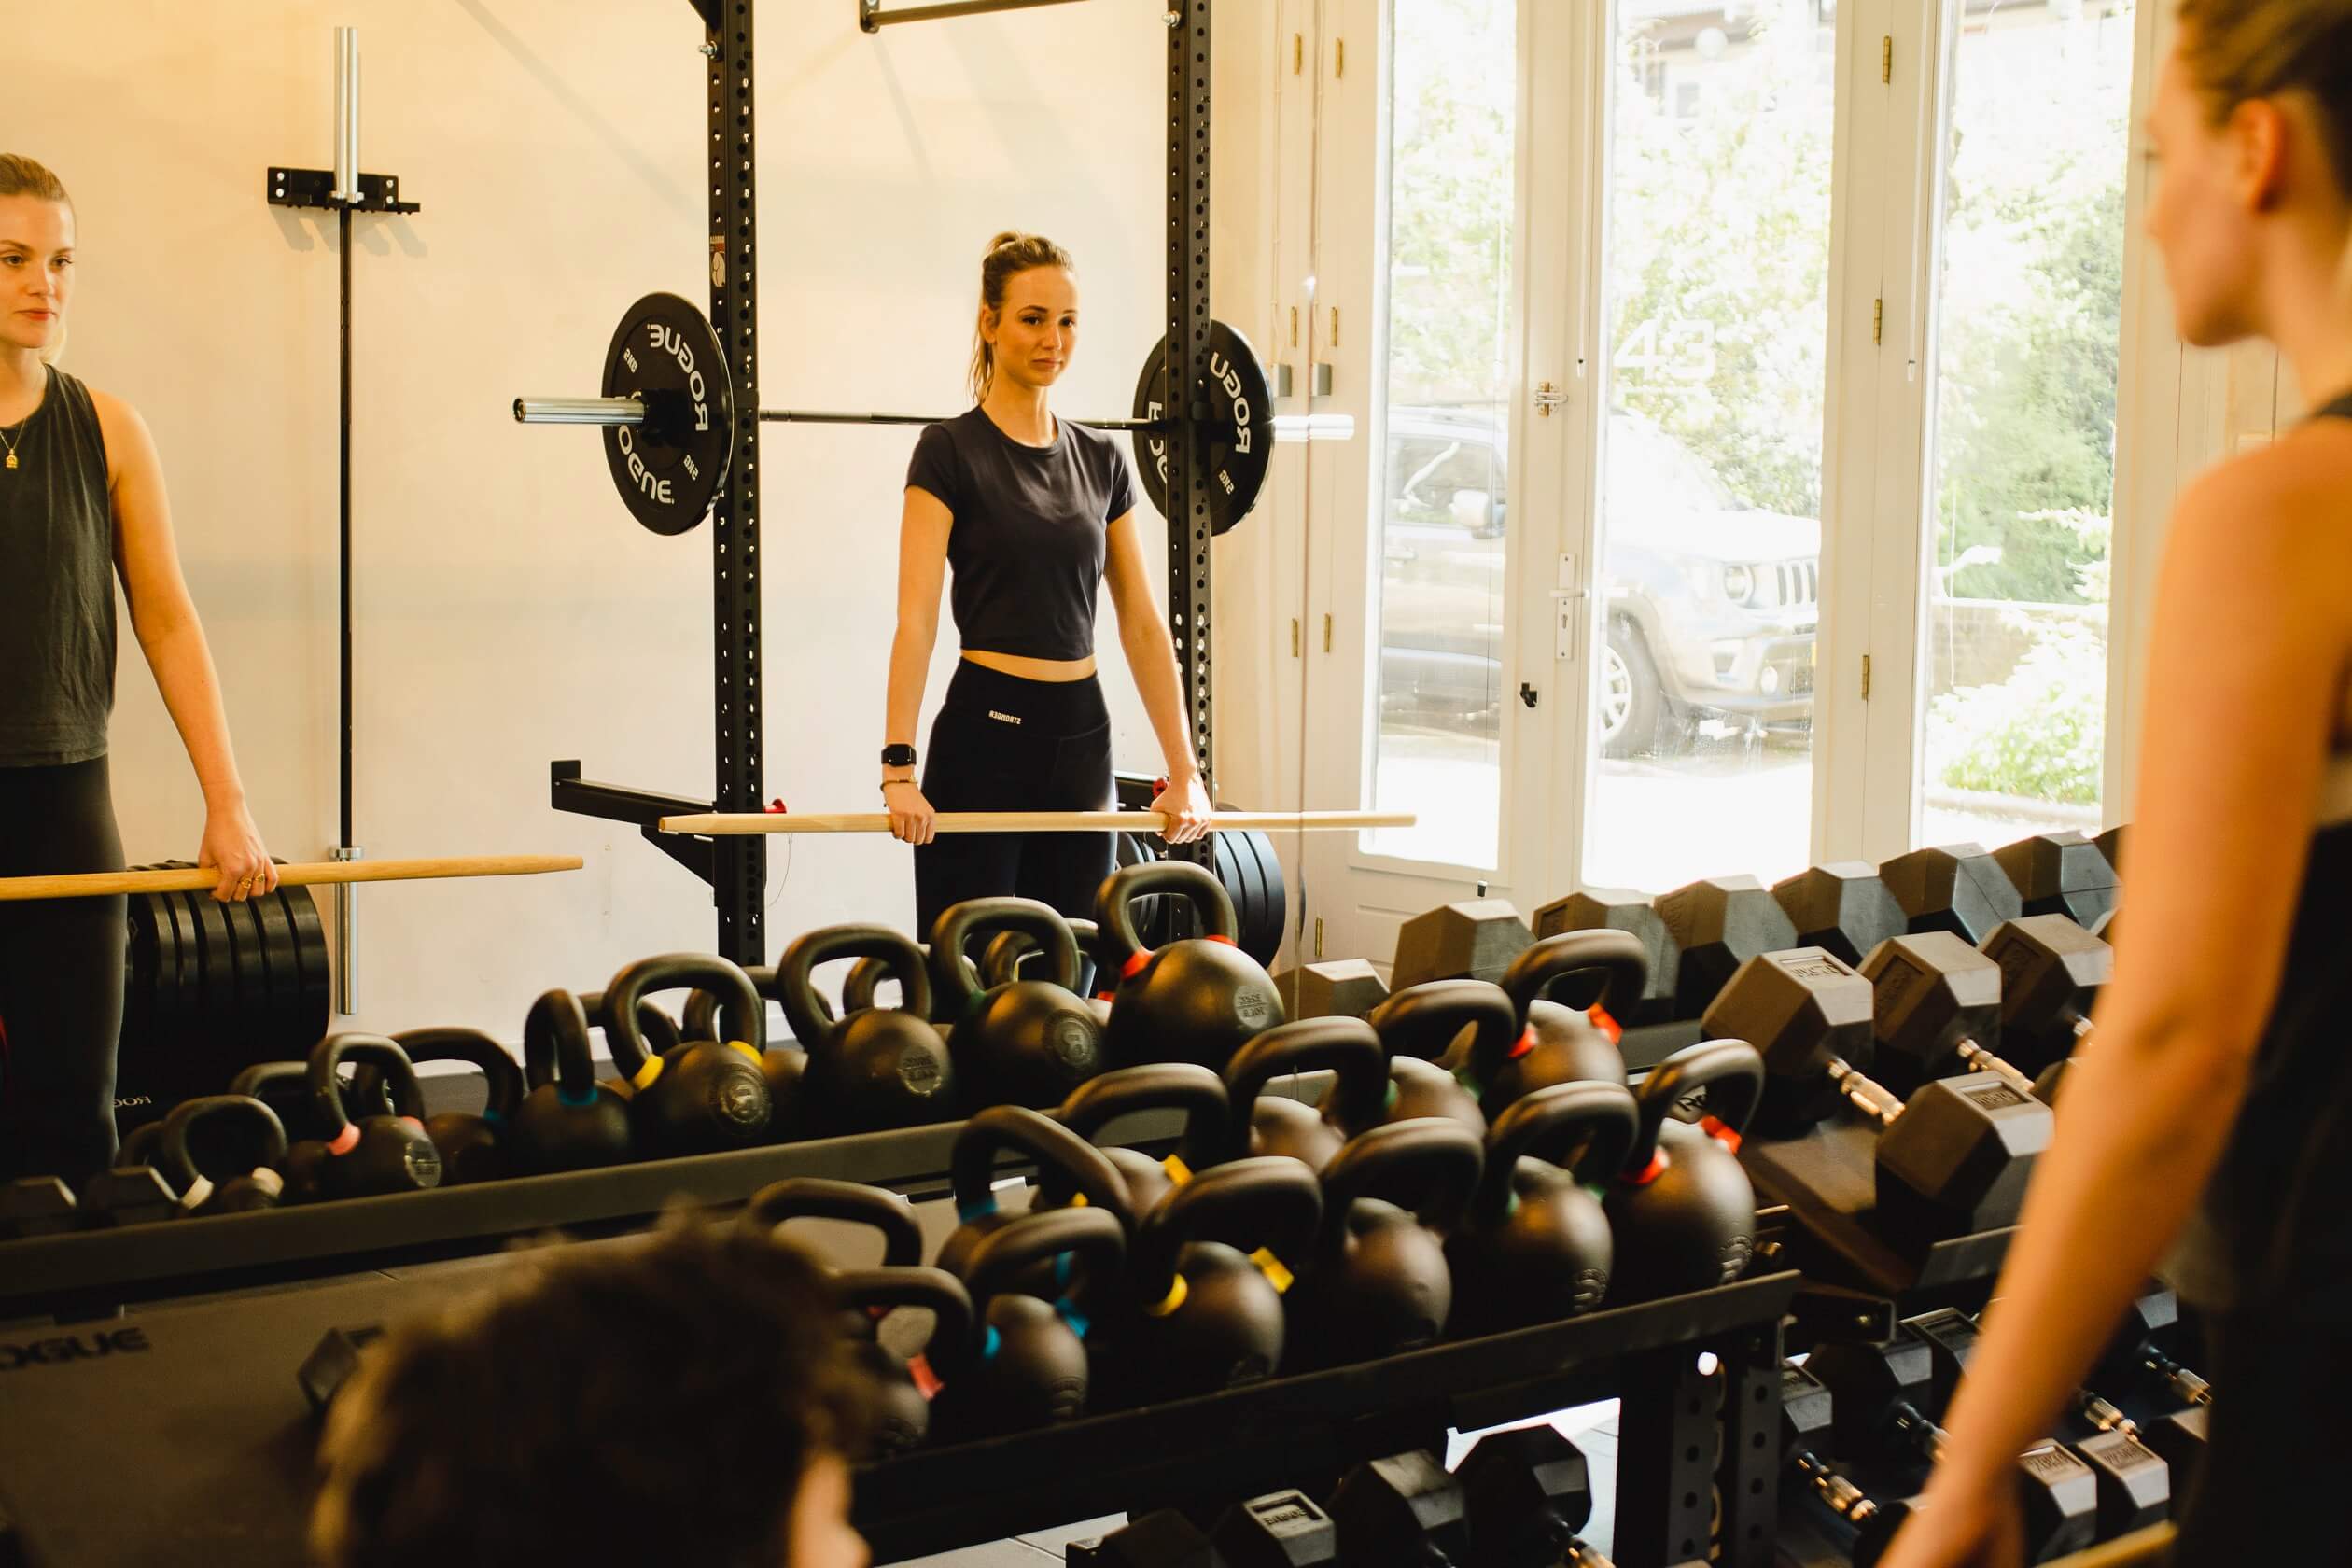 personaltraining-the-garage-gym-amsterdam-women-training